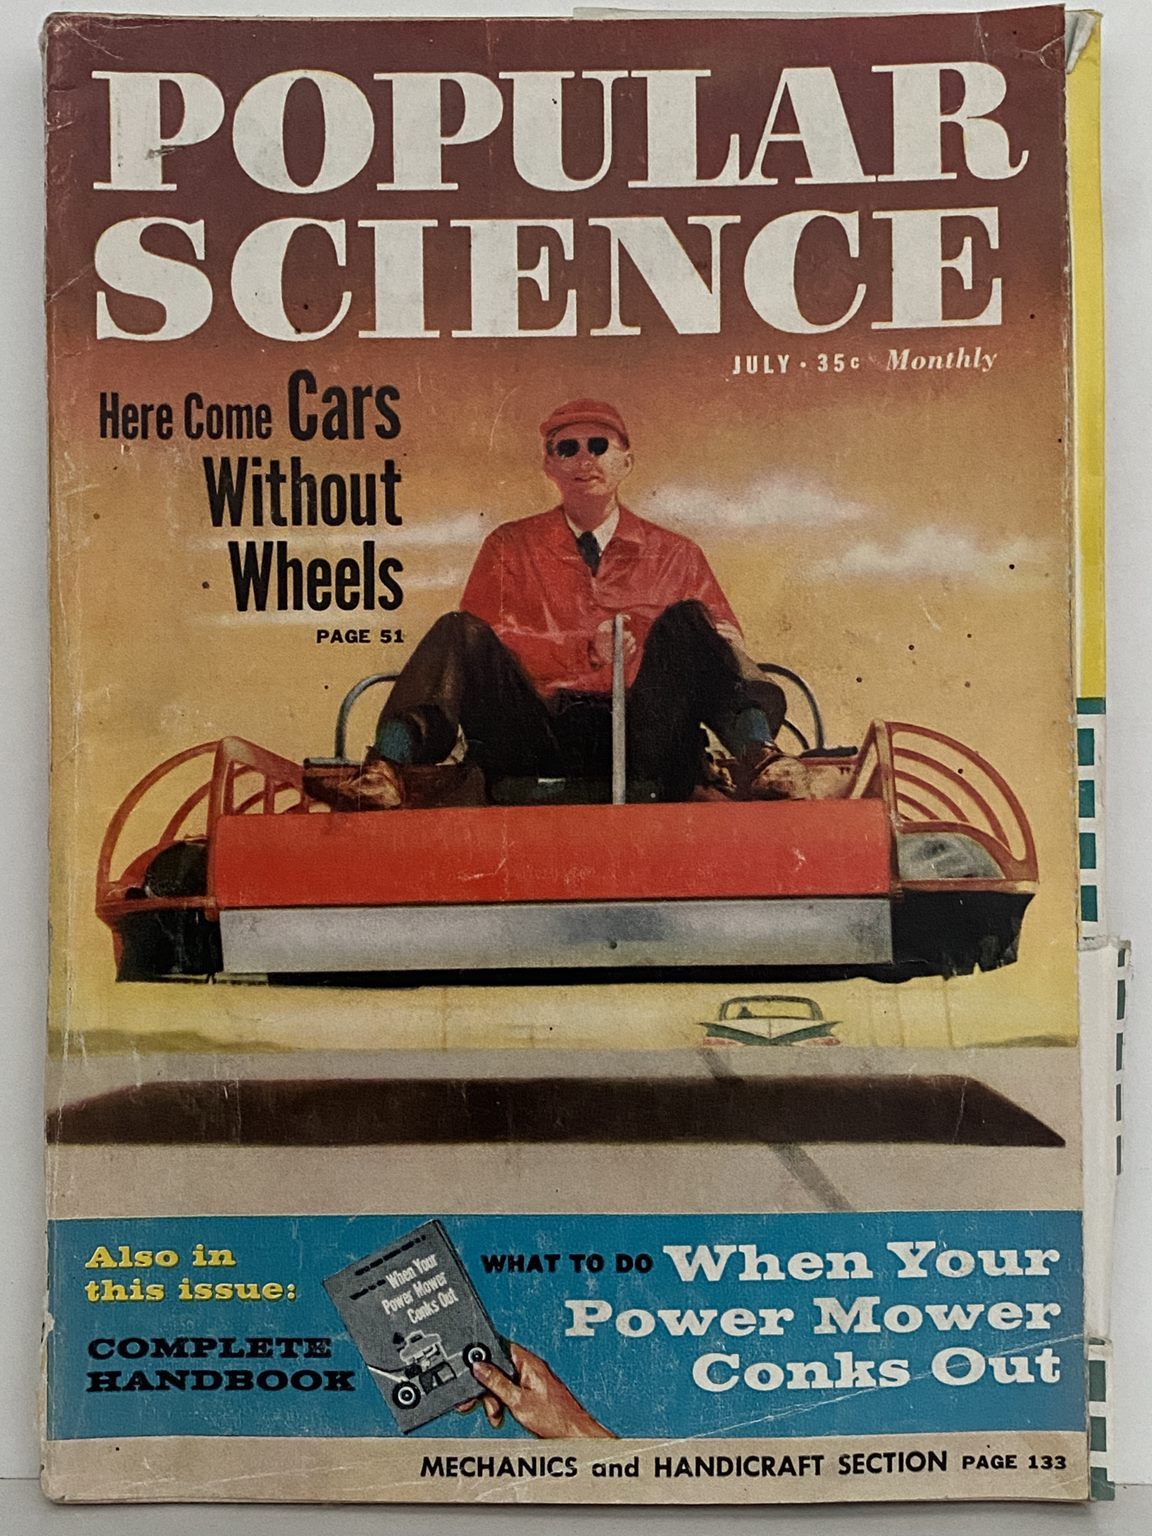 VINTAGE MAGAZINE: Popular Science, Vol. 175, No. 1 - July 1959